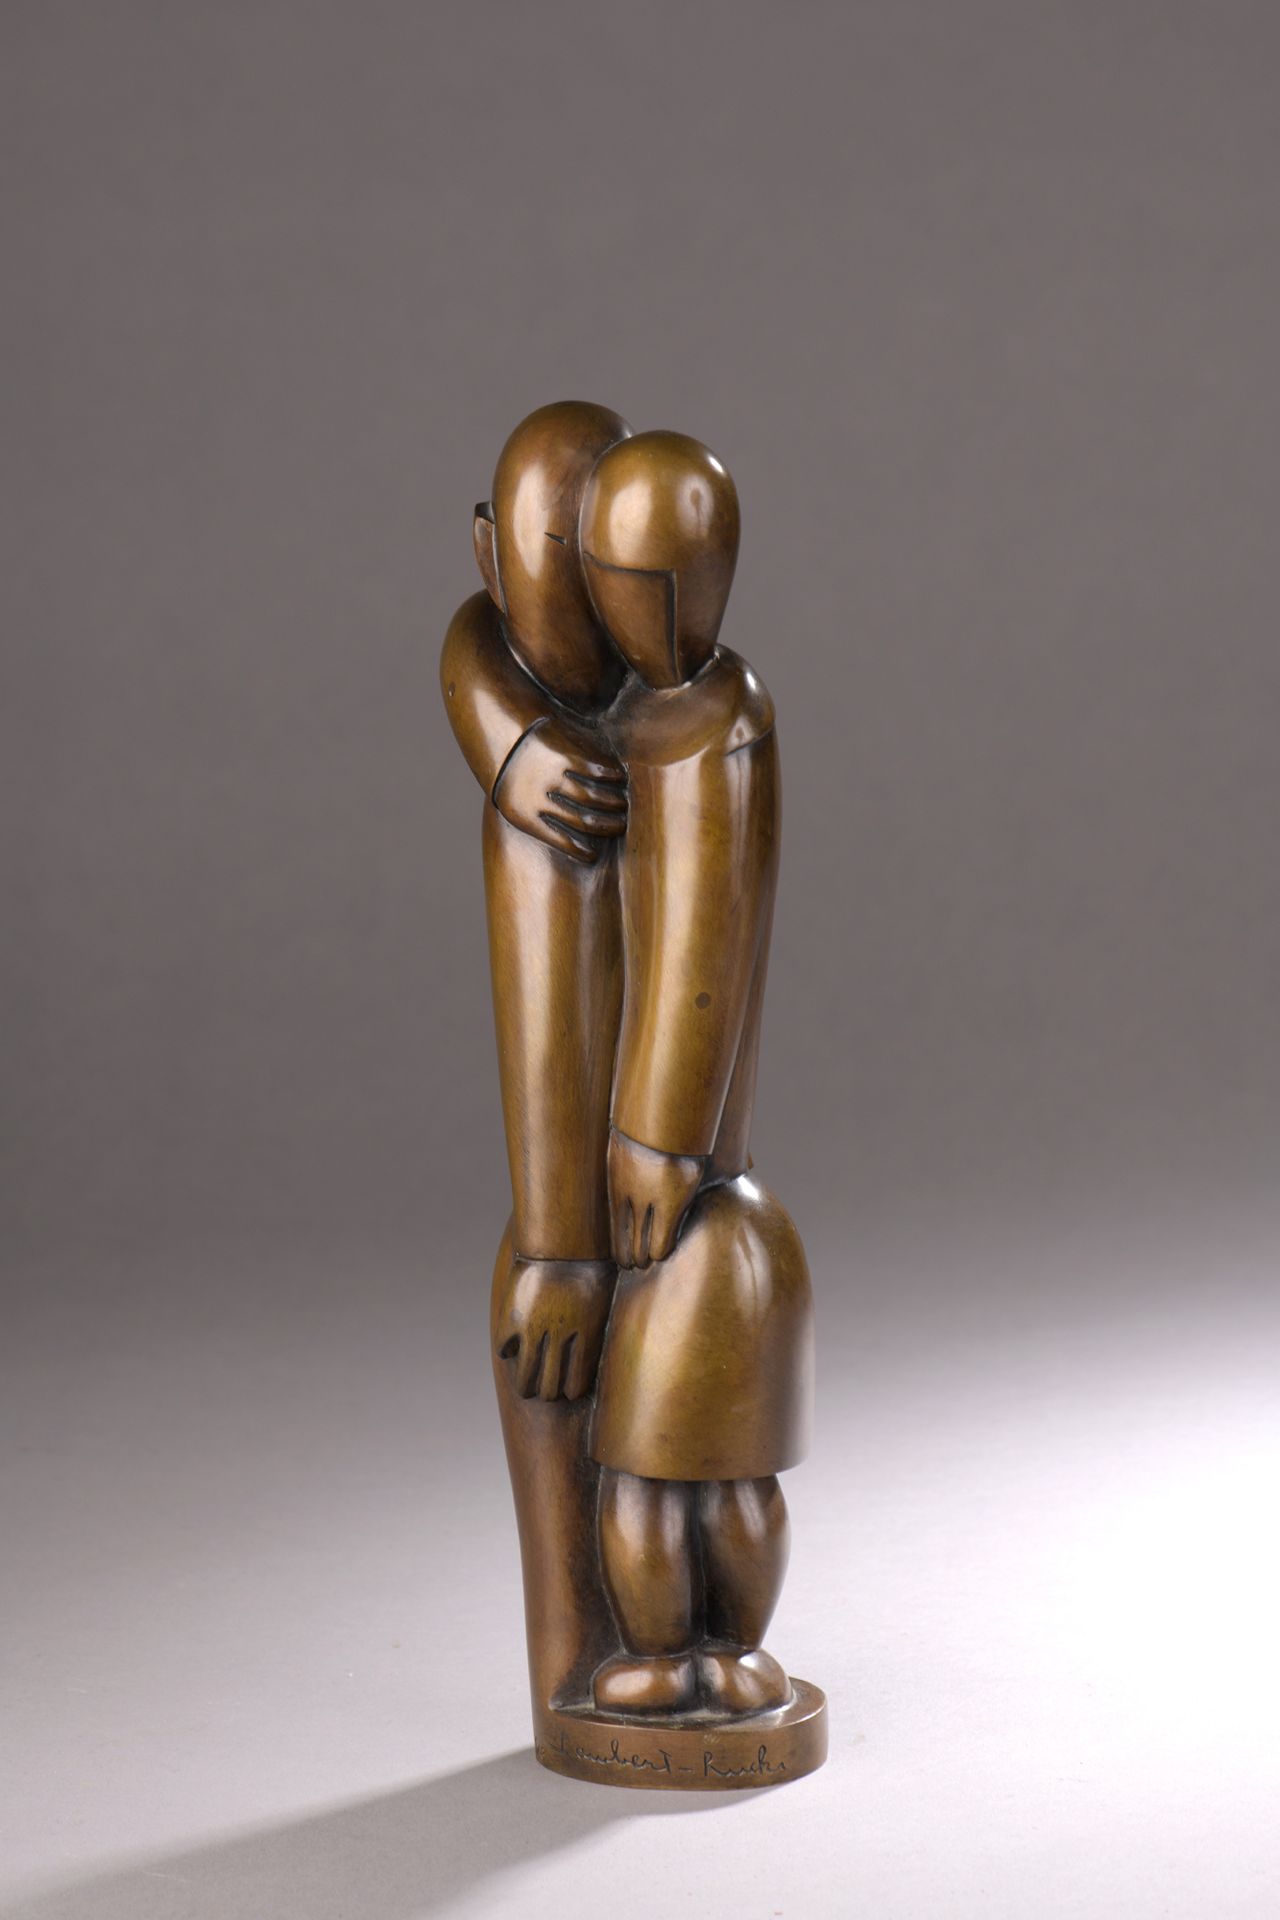 Null Jean LAMBERT-RUCKI (1888-1967)

Les amoureux, 1923

Épreuve en bronze doré &hellip;